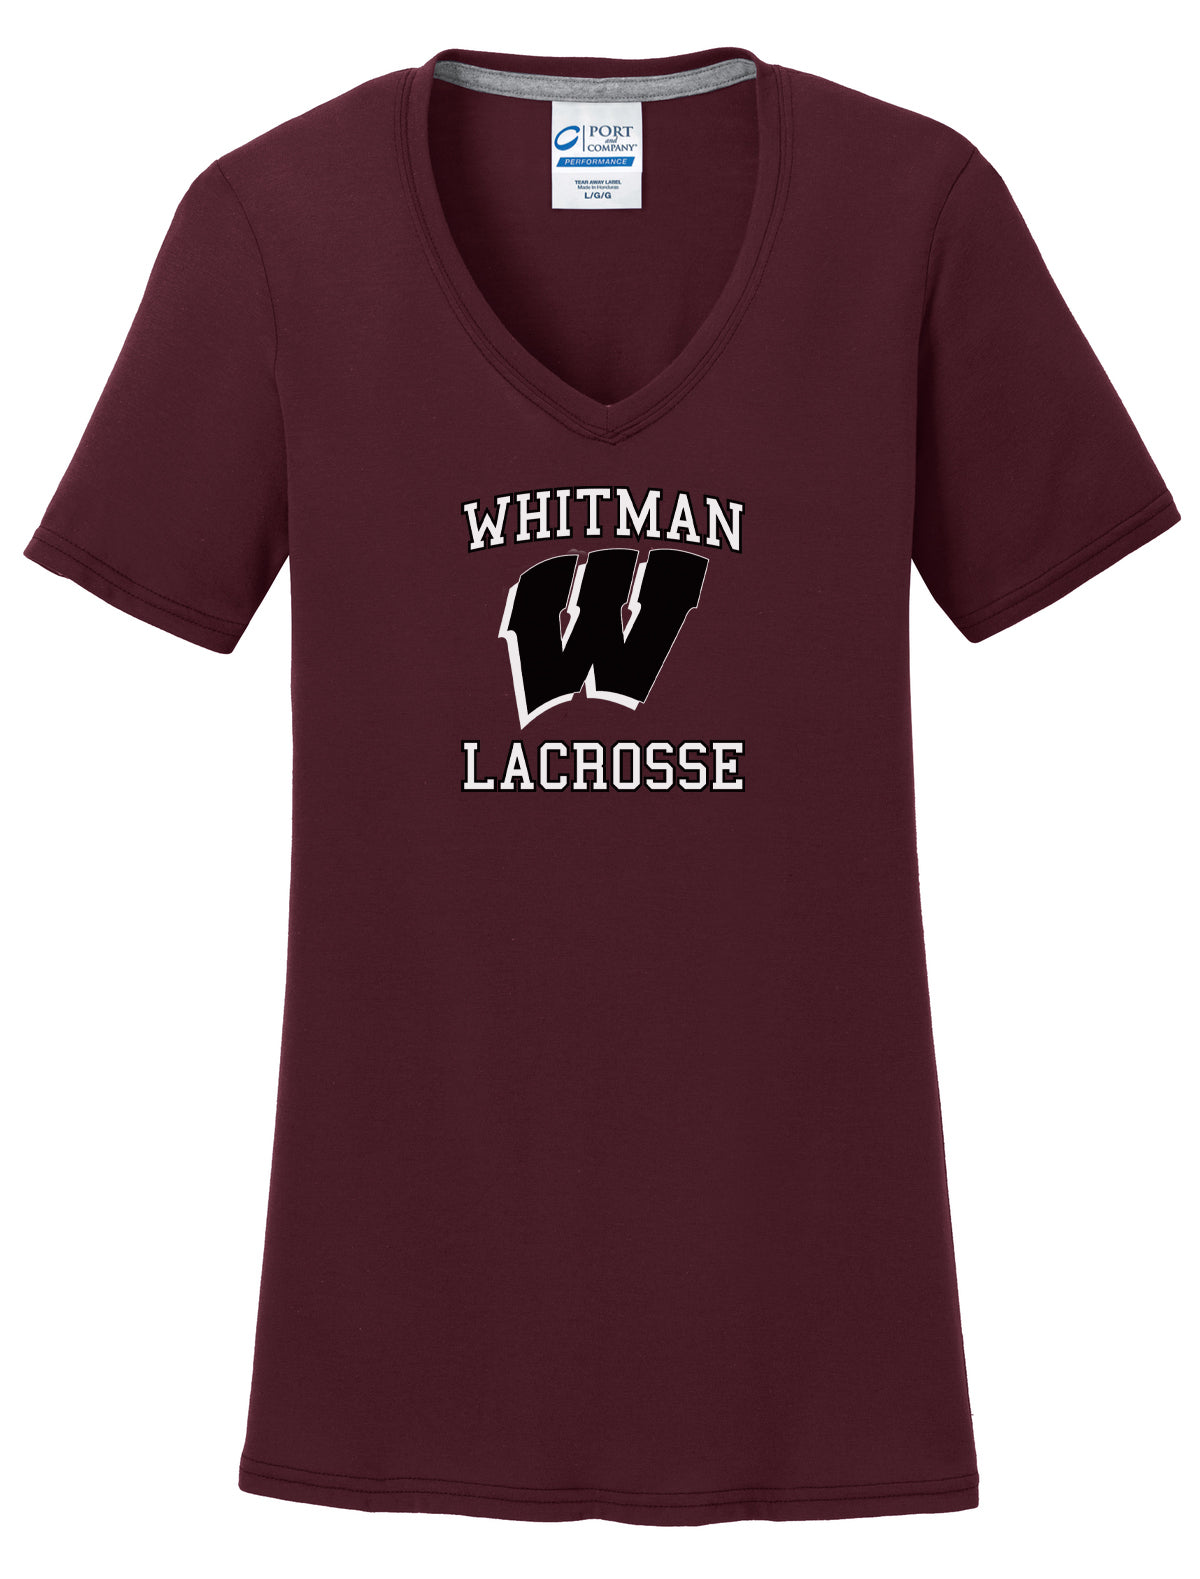 Whitman Lacrosse Women's T-Shirt